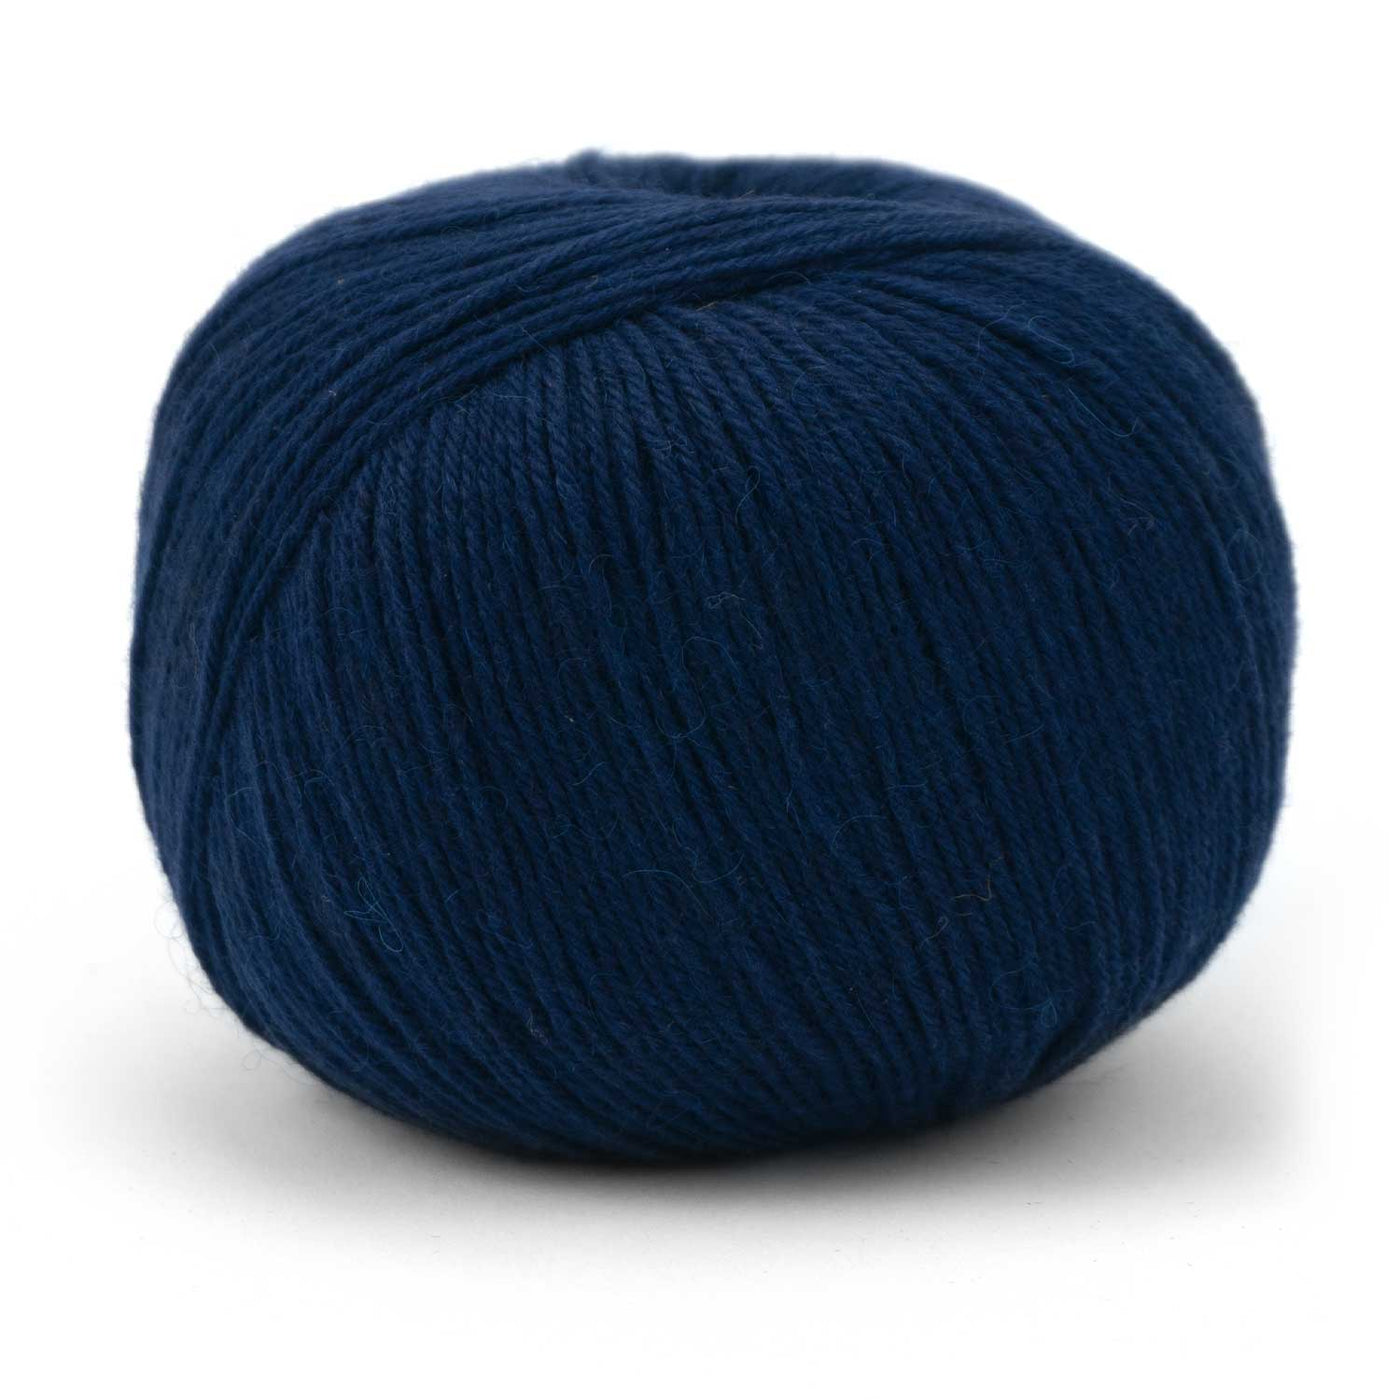 Pascuali Puno Winikunka Fingering Cotton Alpaca Knitting Yarn